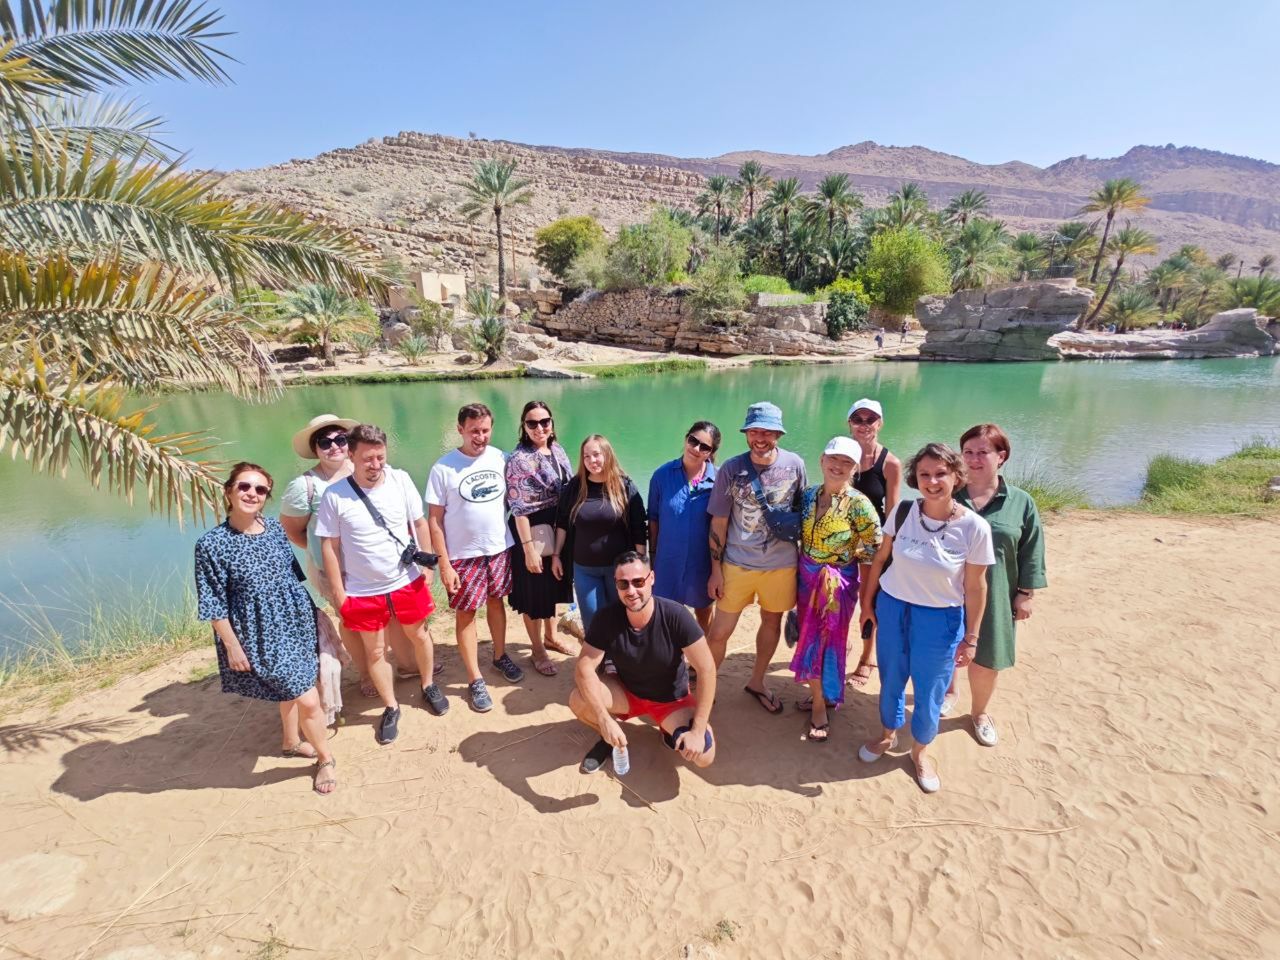 Оазис Wadi Shab и озеро Bimmah Sink Hole | Цена 625$, отзывы, описание экскурсии